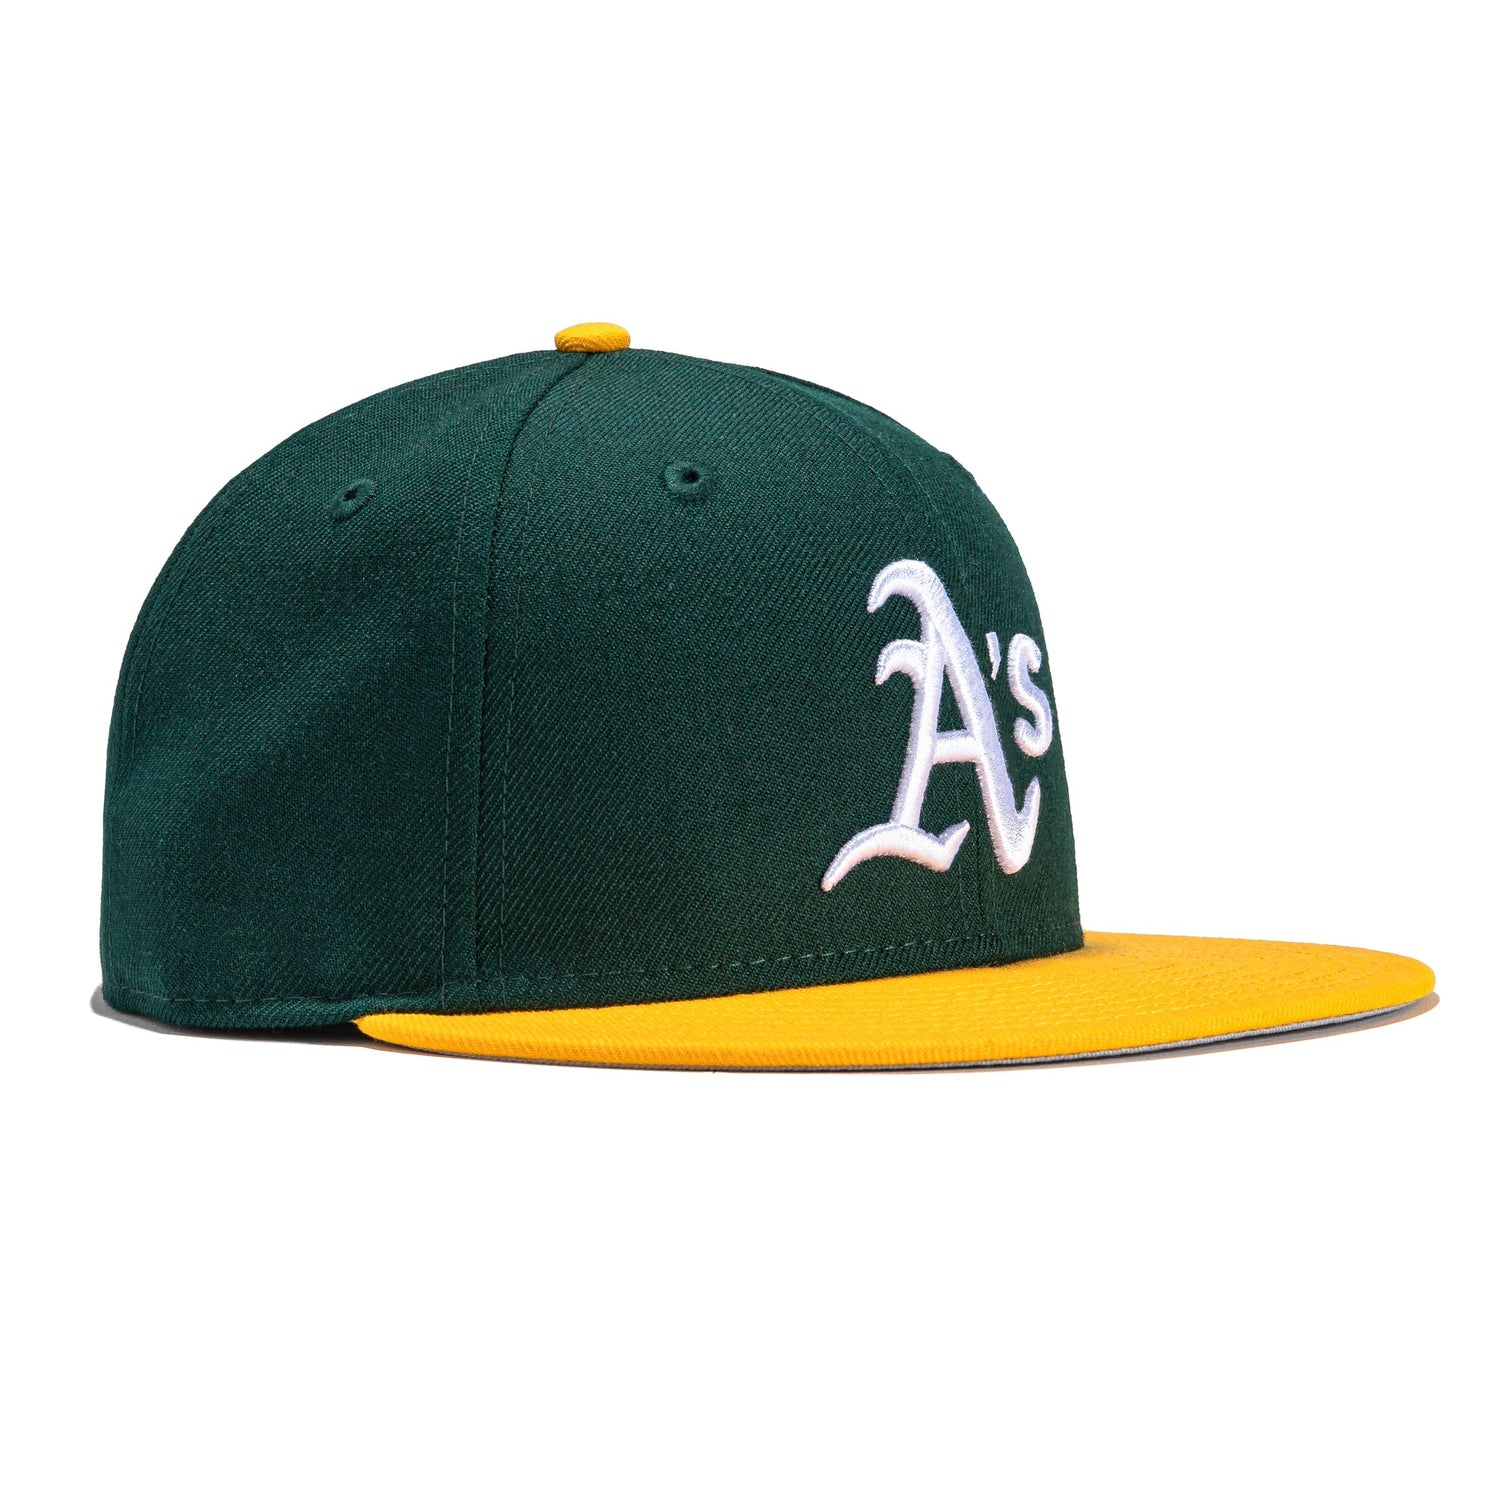 MLB Athletics Team Green/Yellow Baseball Cap